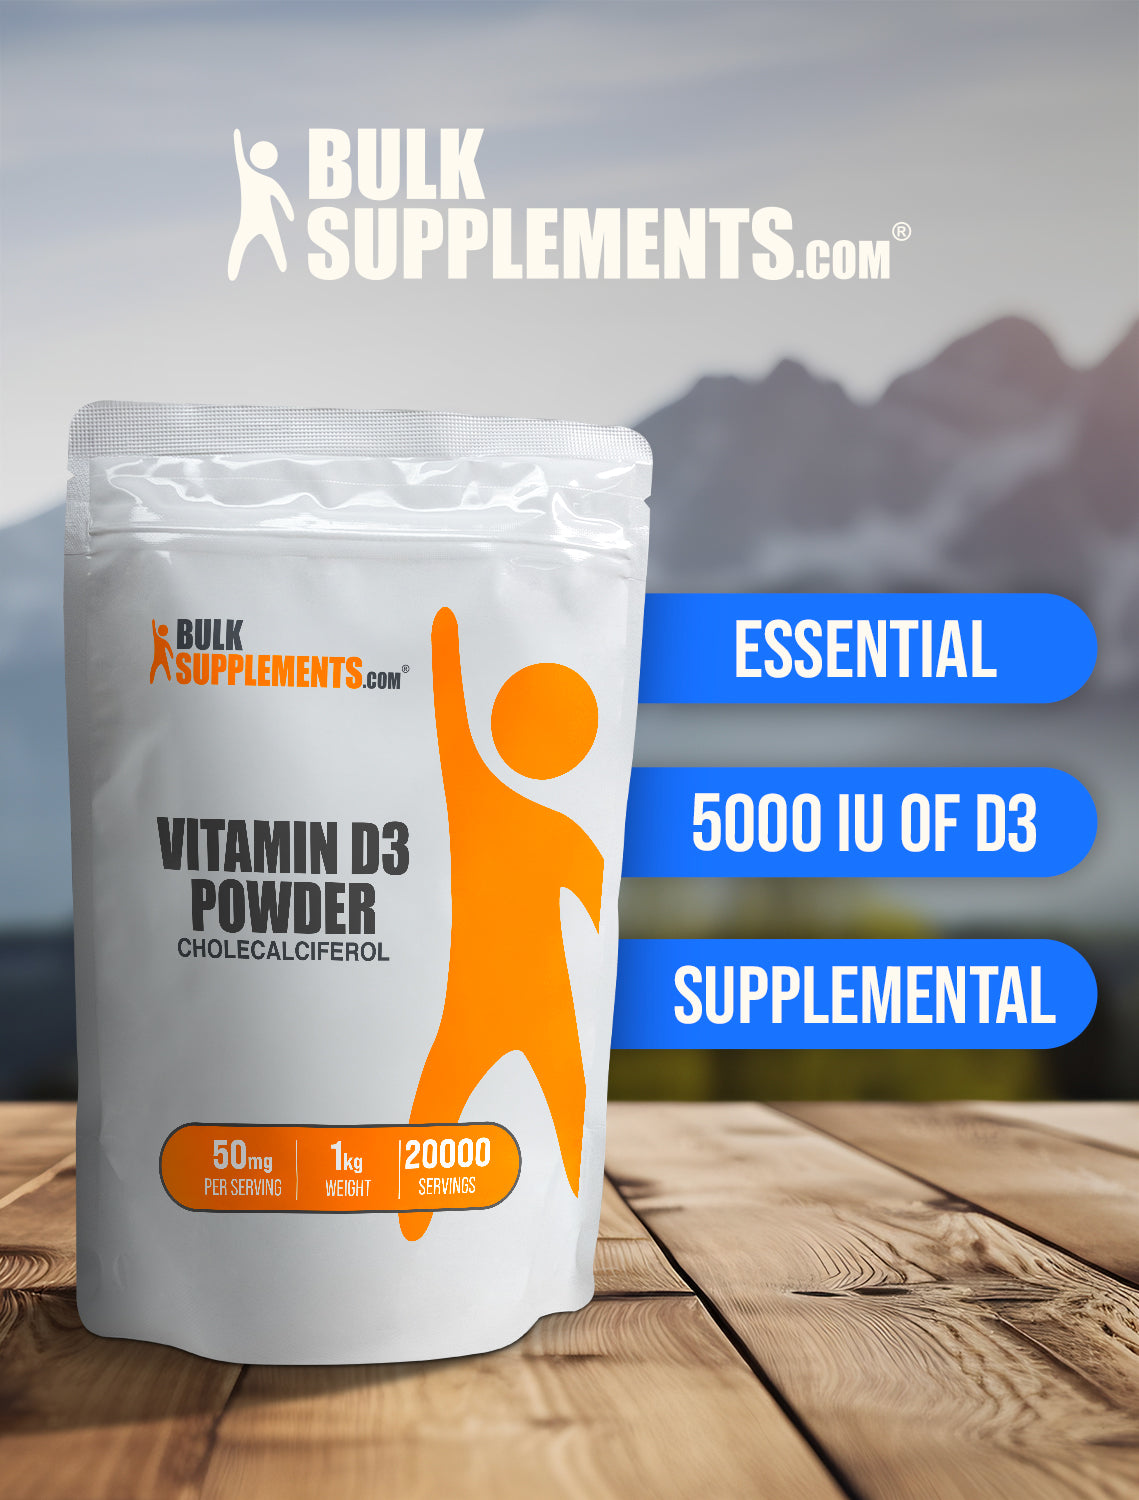 Vitamin D3 powder keyword image 1kg